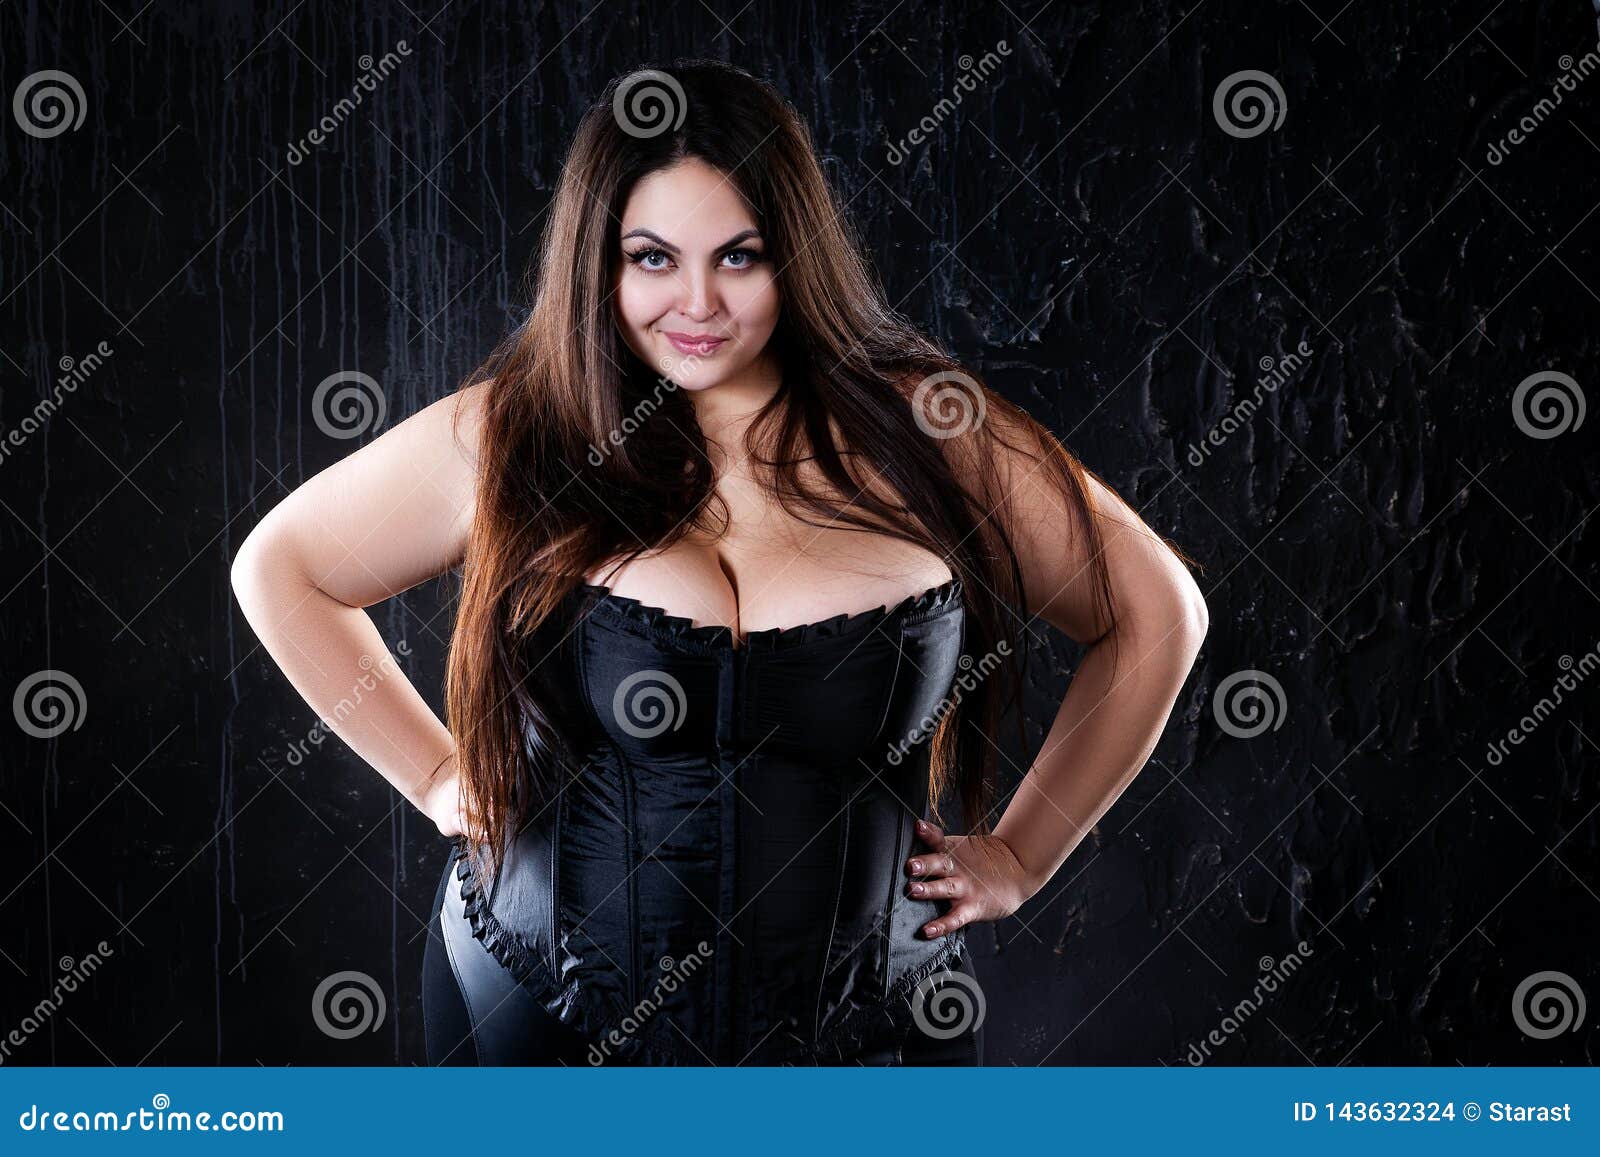 Black Boob Large Woman